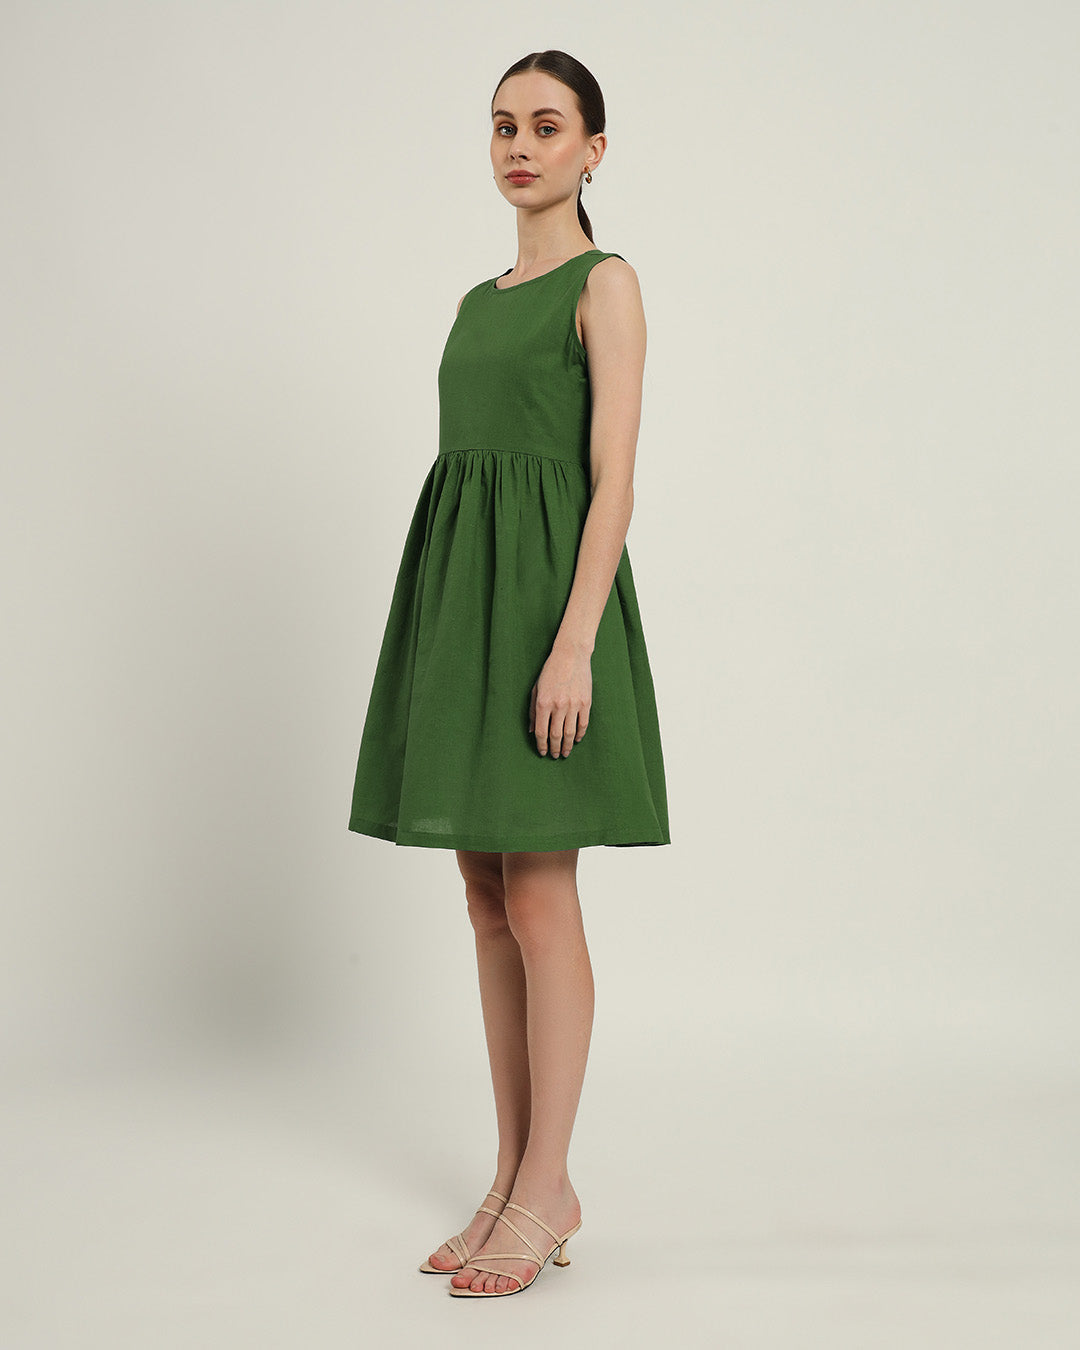 The Chania Emerald Cotton Dress